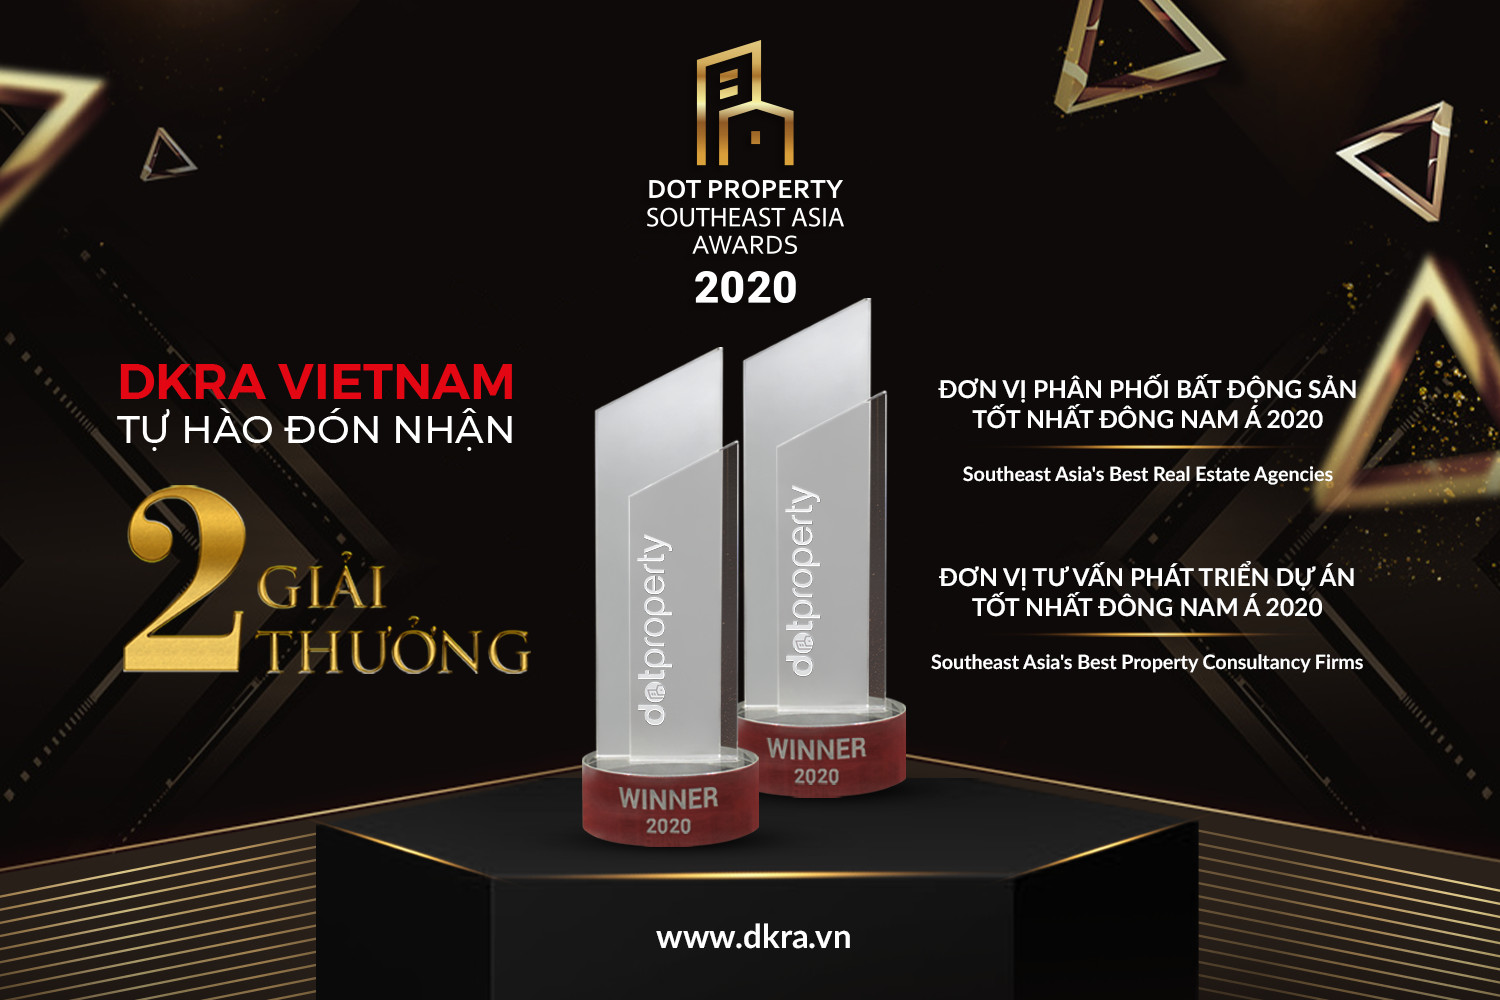 Giải thưởng Dot Property Southeast Asia Awards